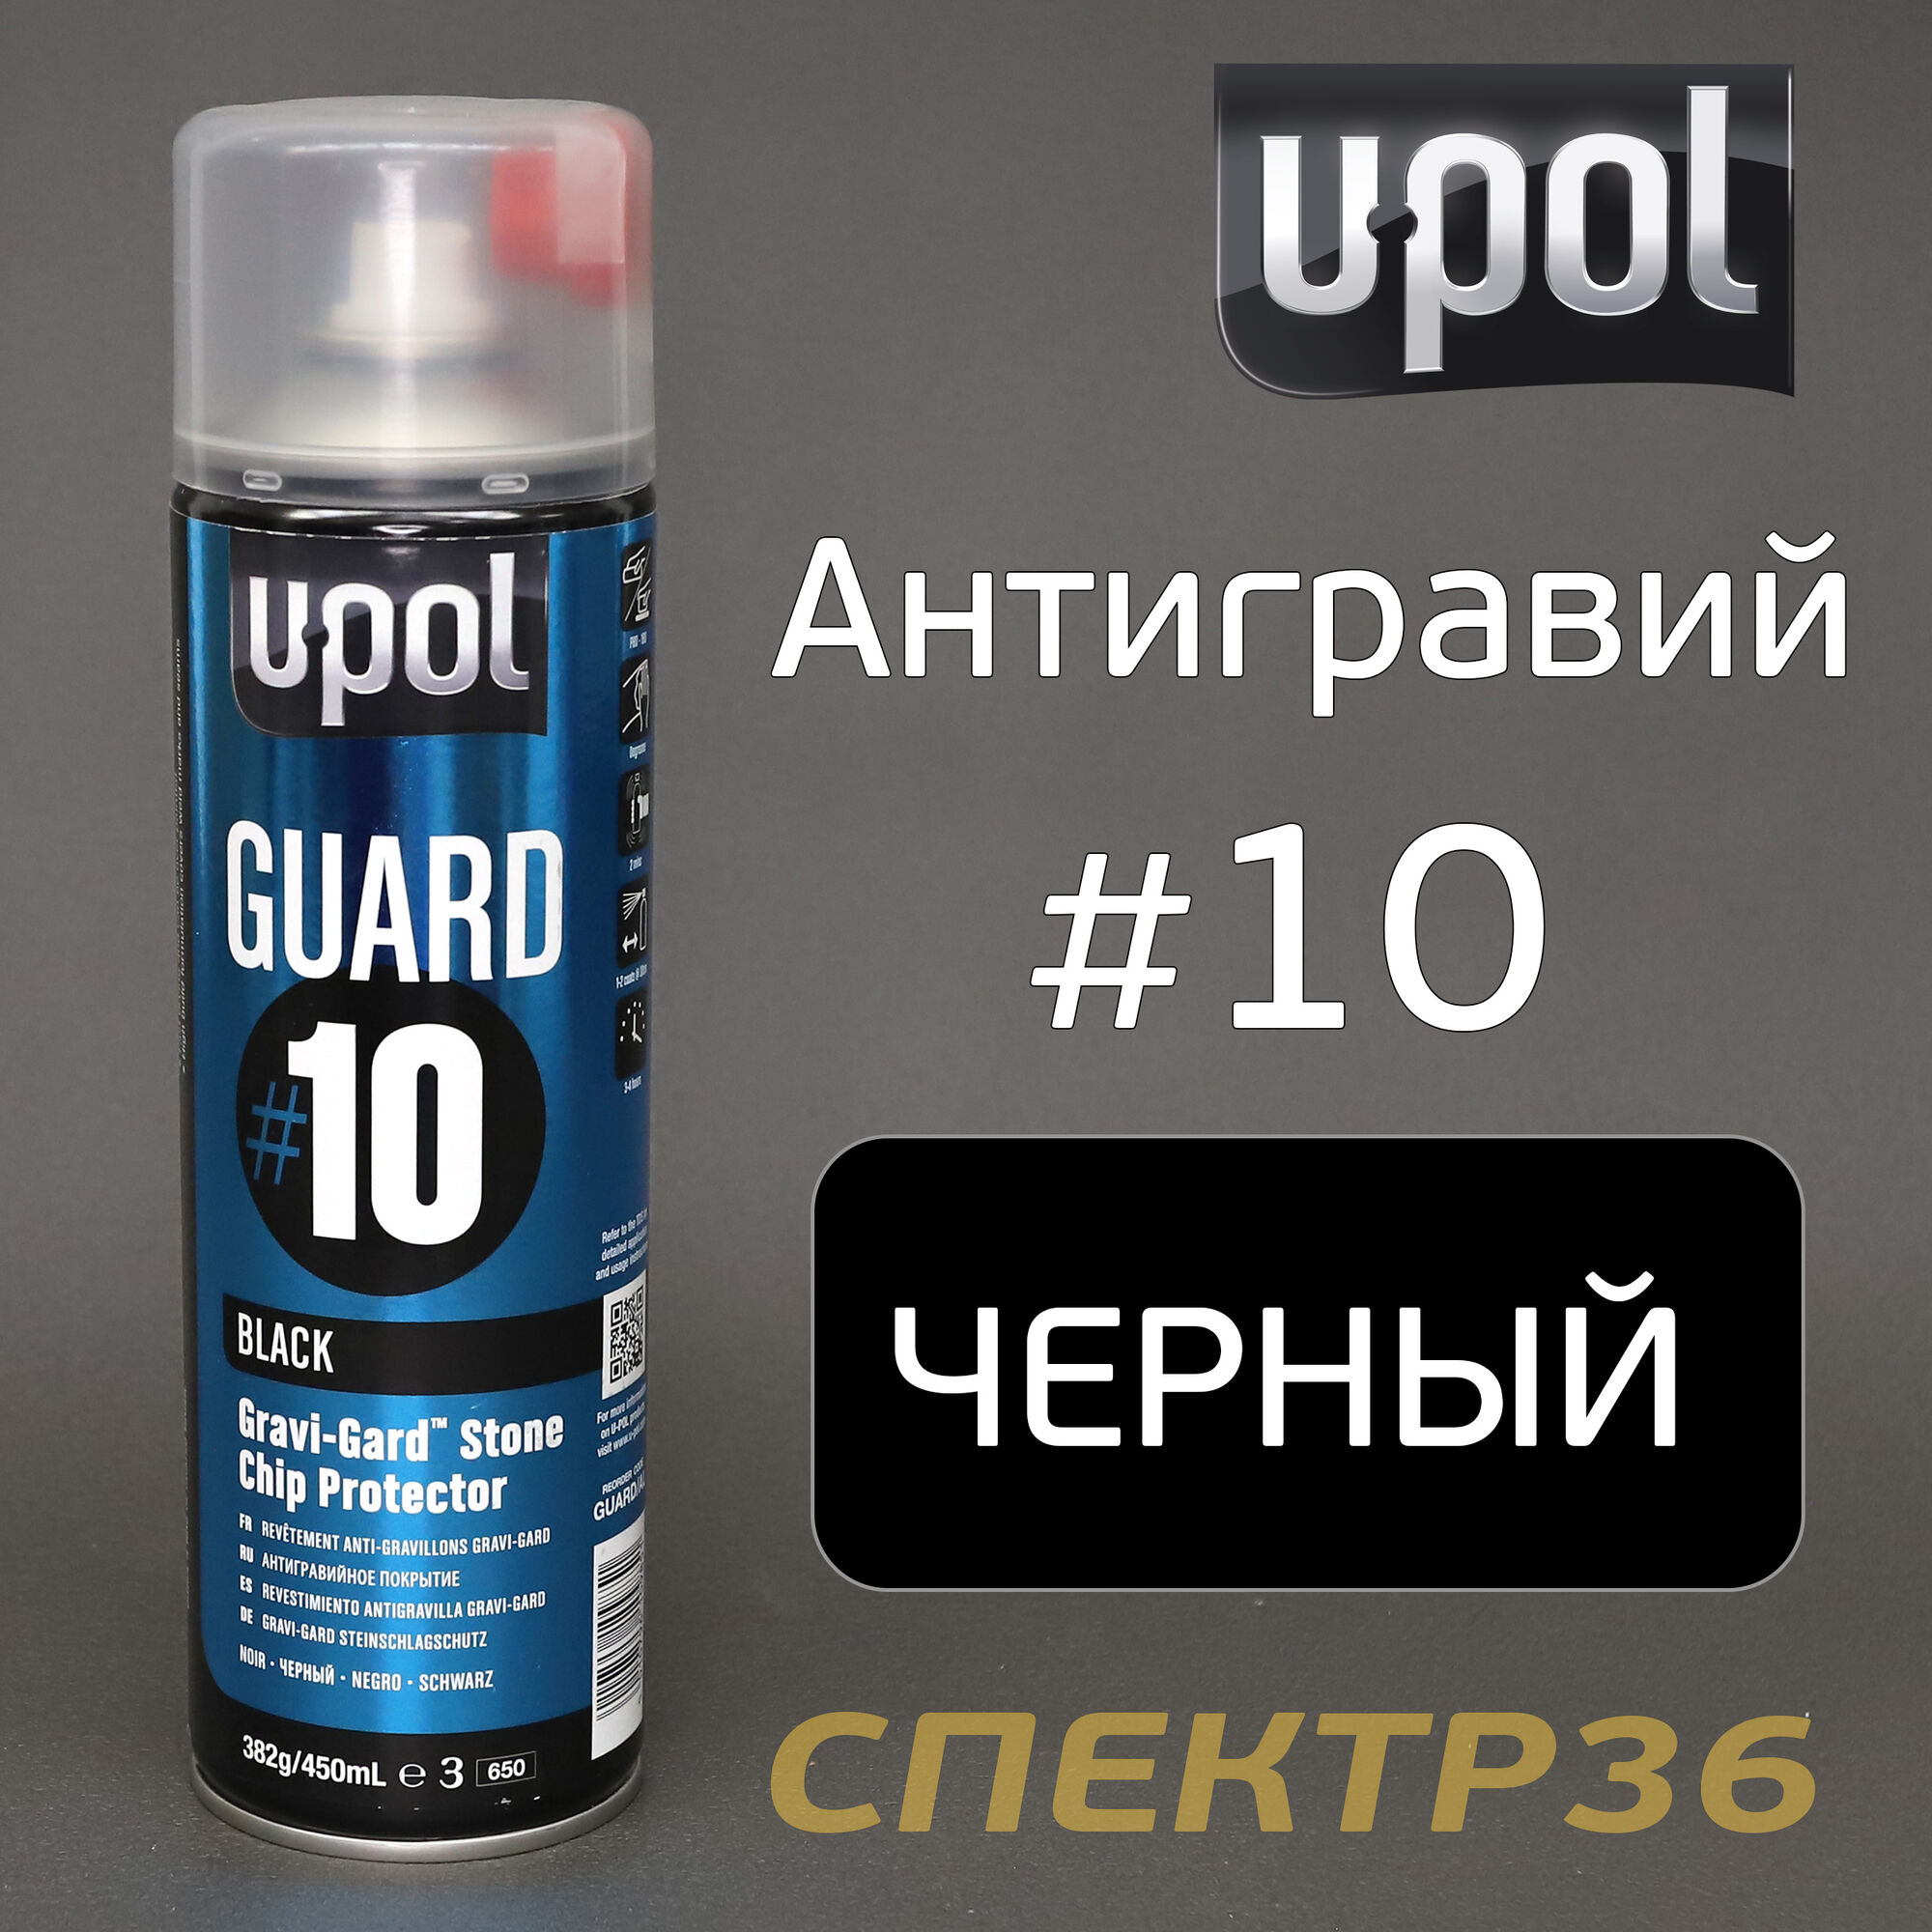 Антигравий U-POL Guard #10 черный (450мл) спрей